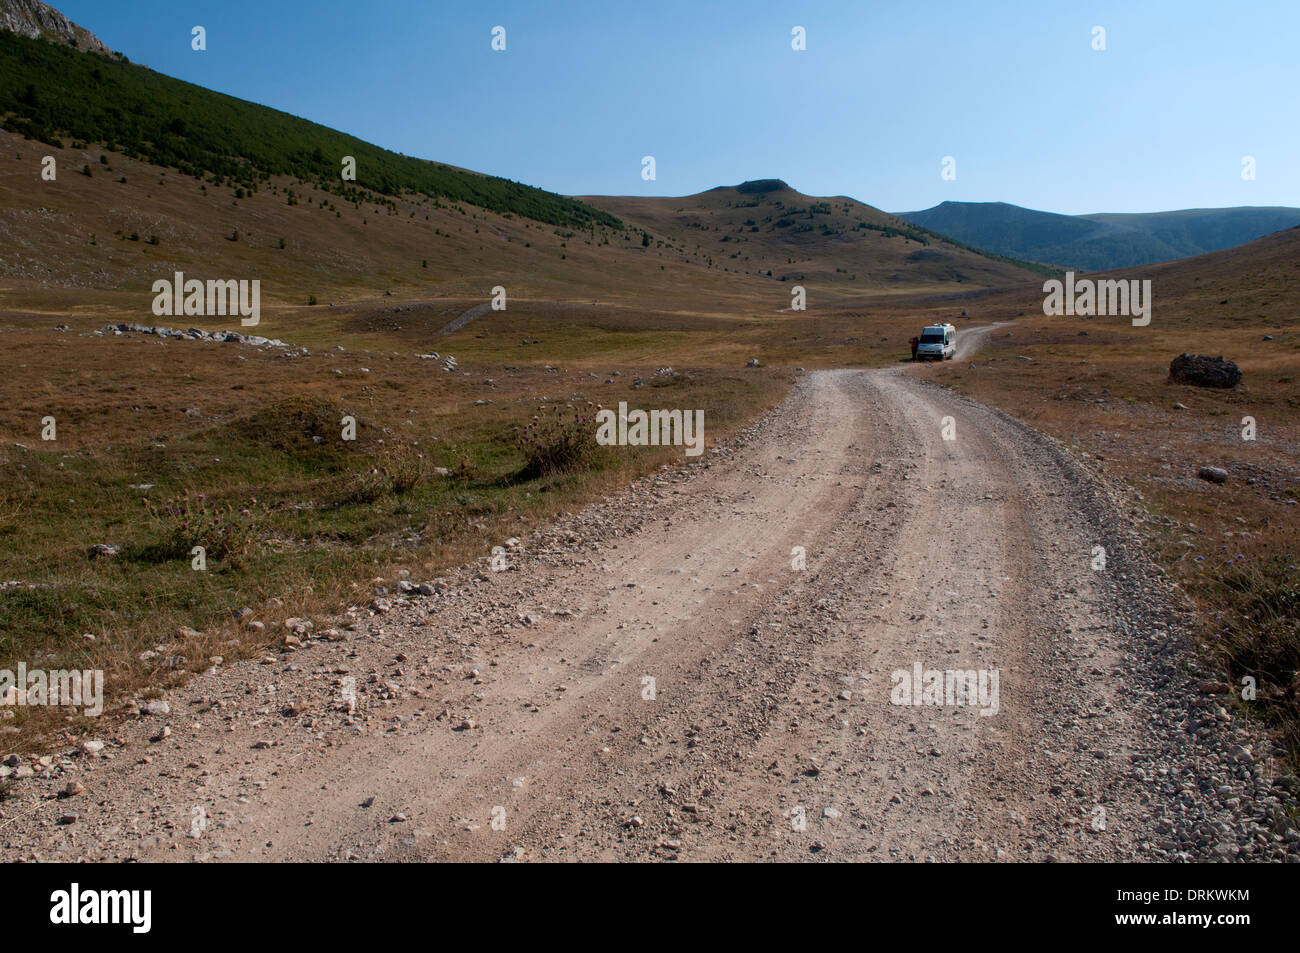 Un furgone sulla strada sporca a Lukomir village, Bjelašnica zona di montagna, Bosnia Erzegovina Foto Stock